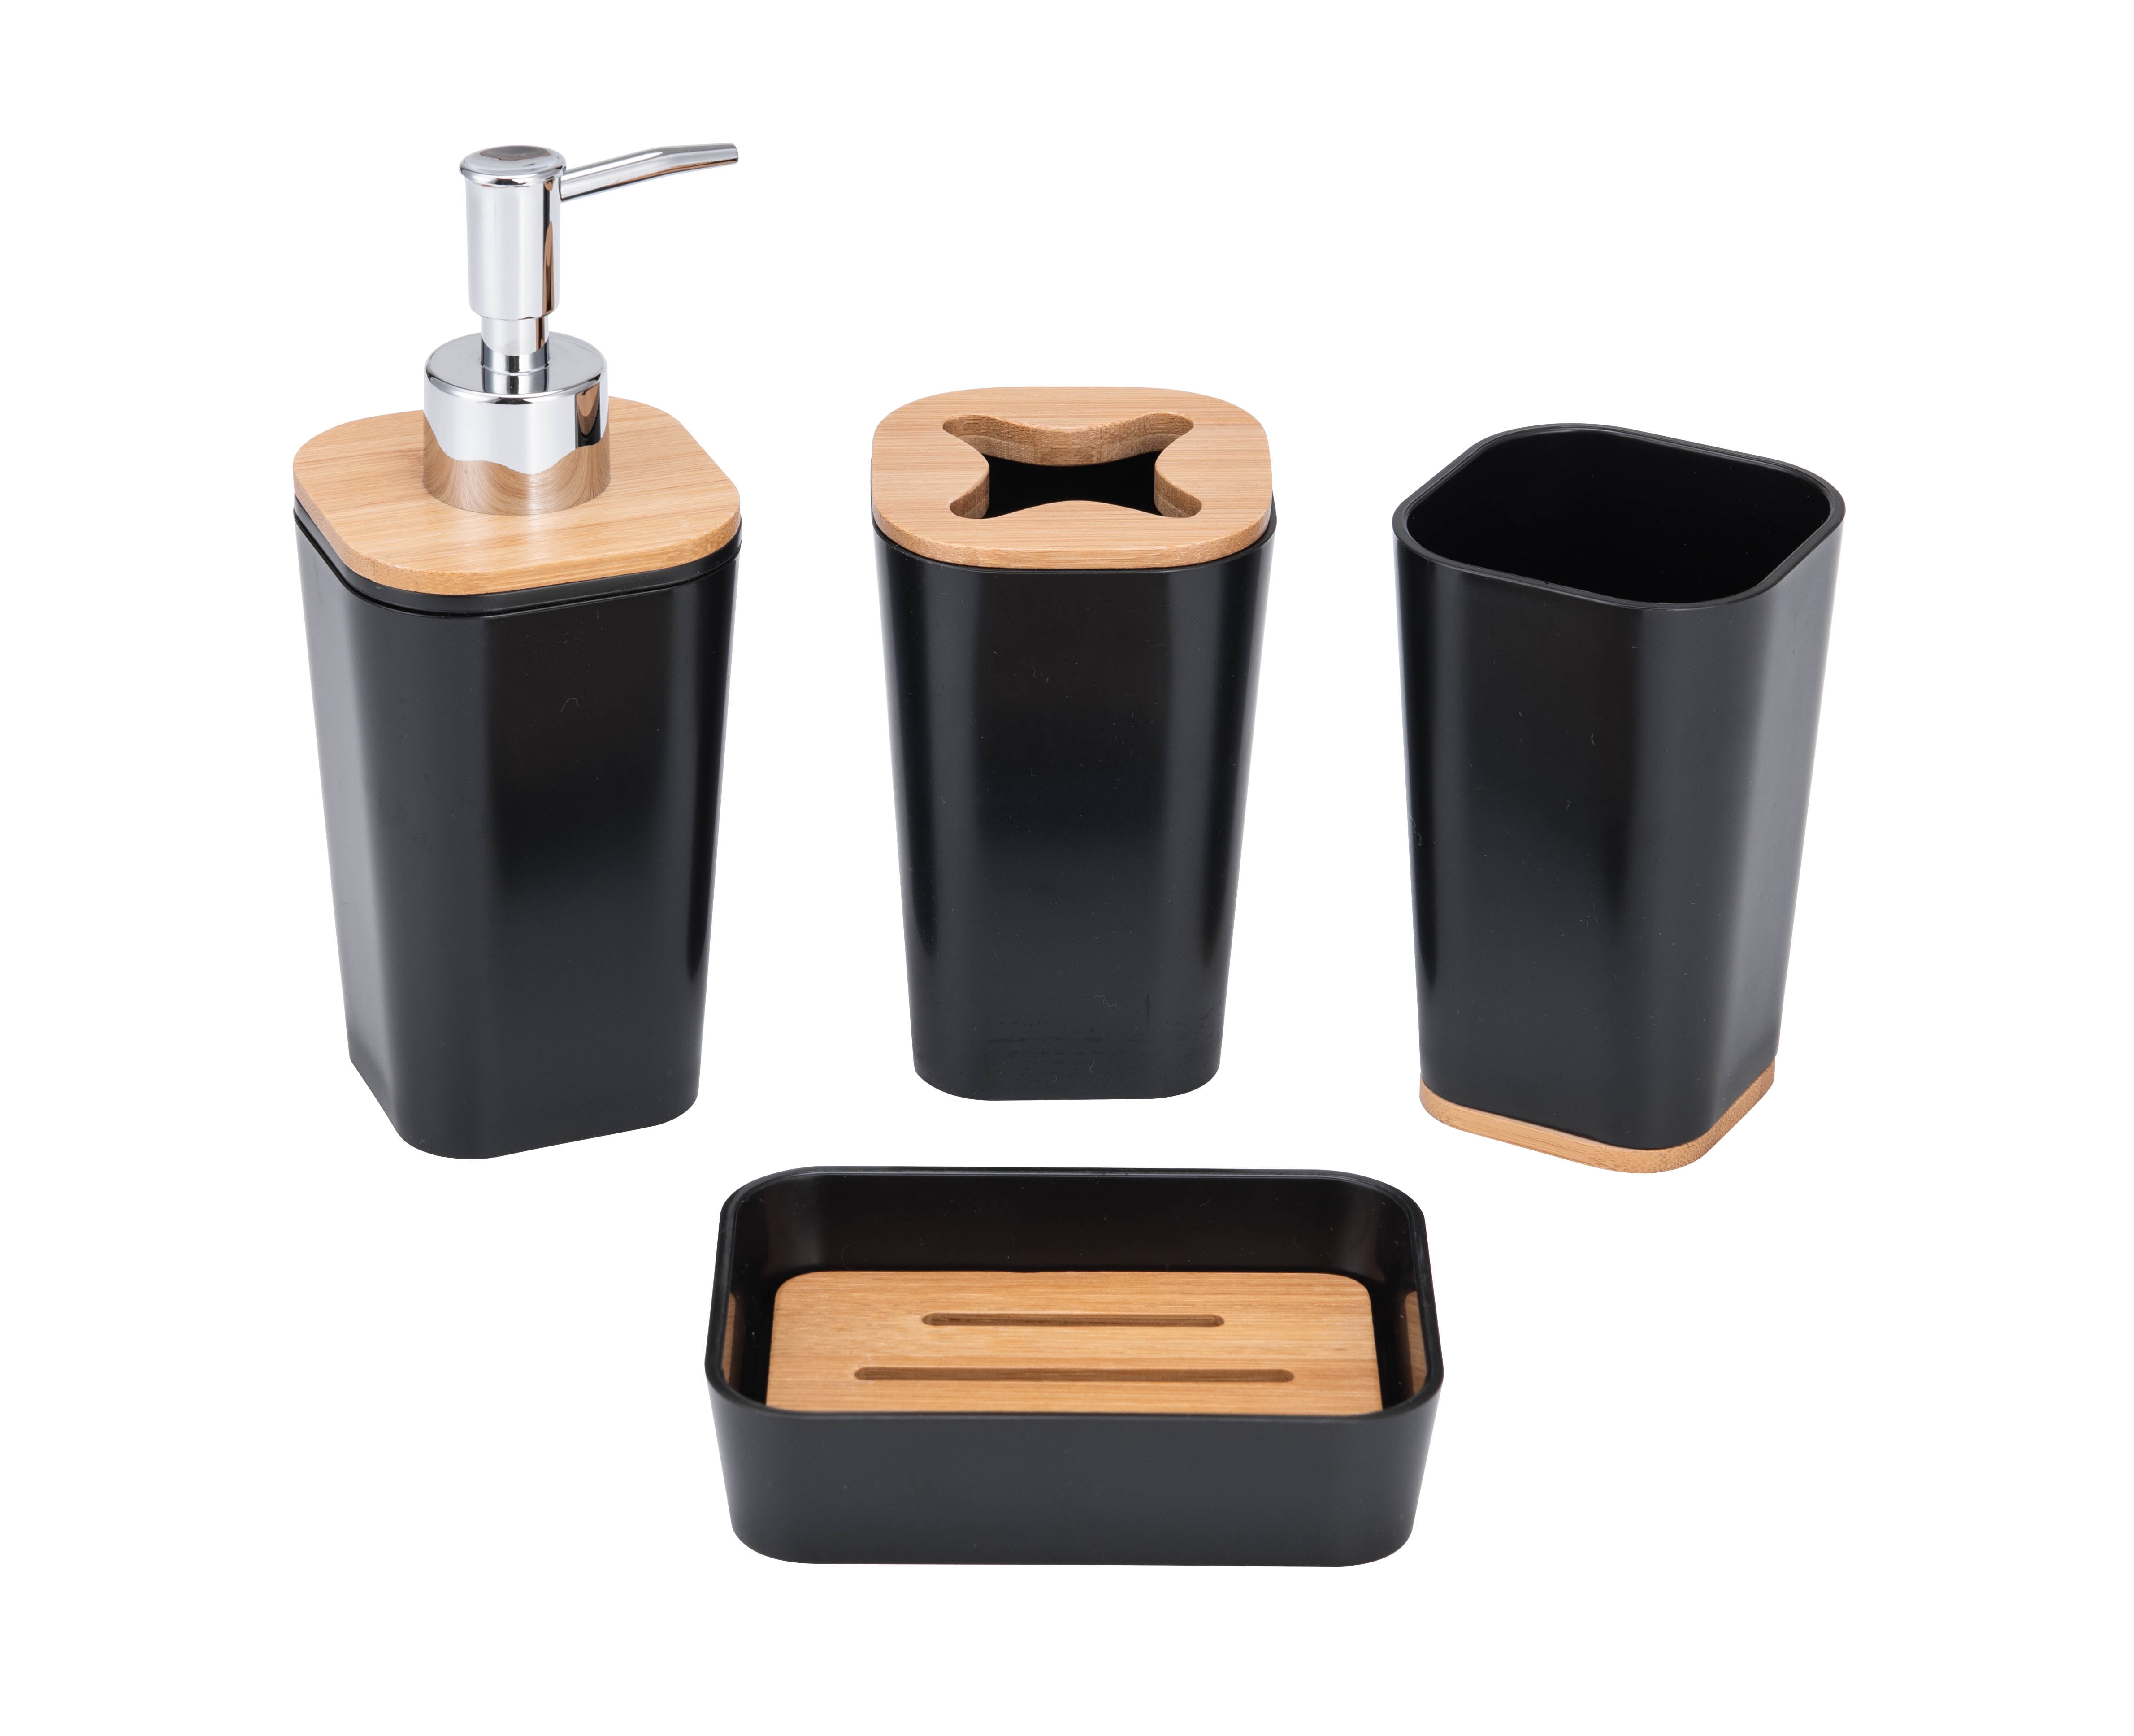 Dish Kralix 4-Piece Bathroom Set Tumbler Accessories Includes Decorative Countertop Soap Dispenser Toothbrush Holder